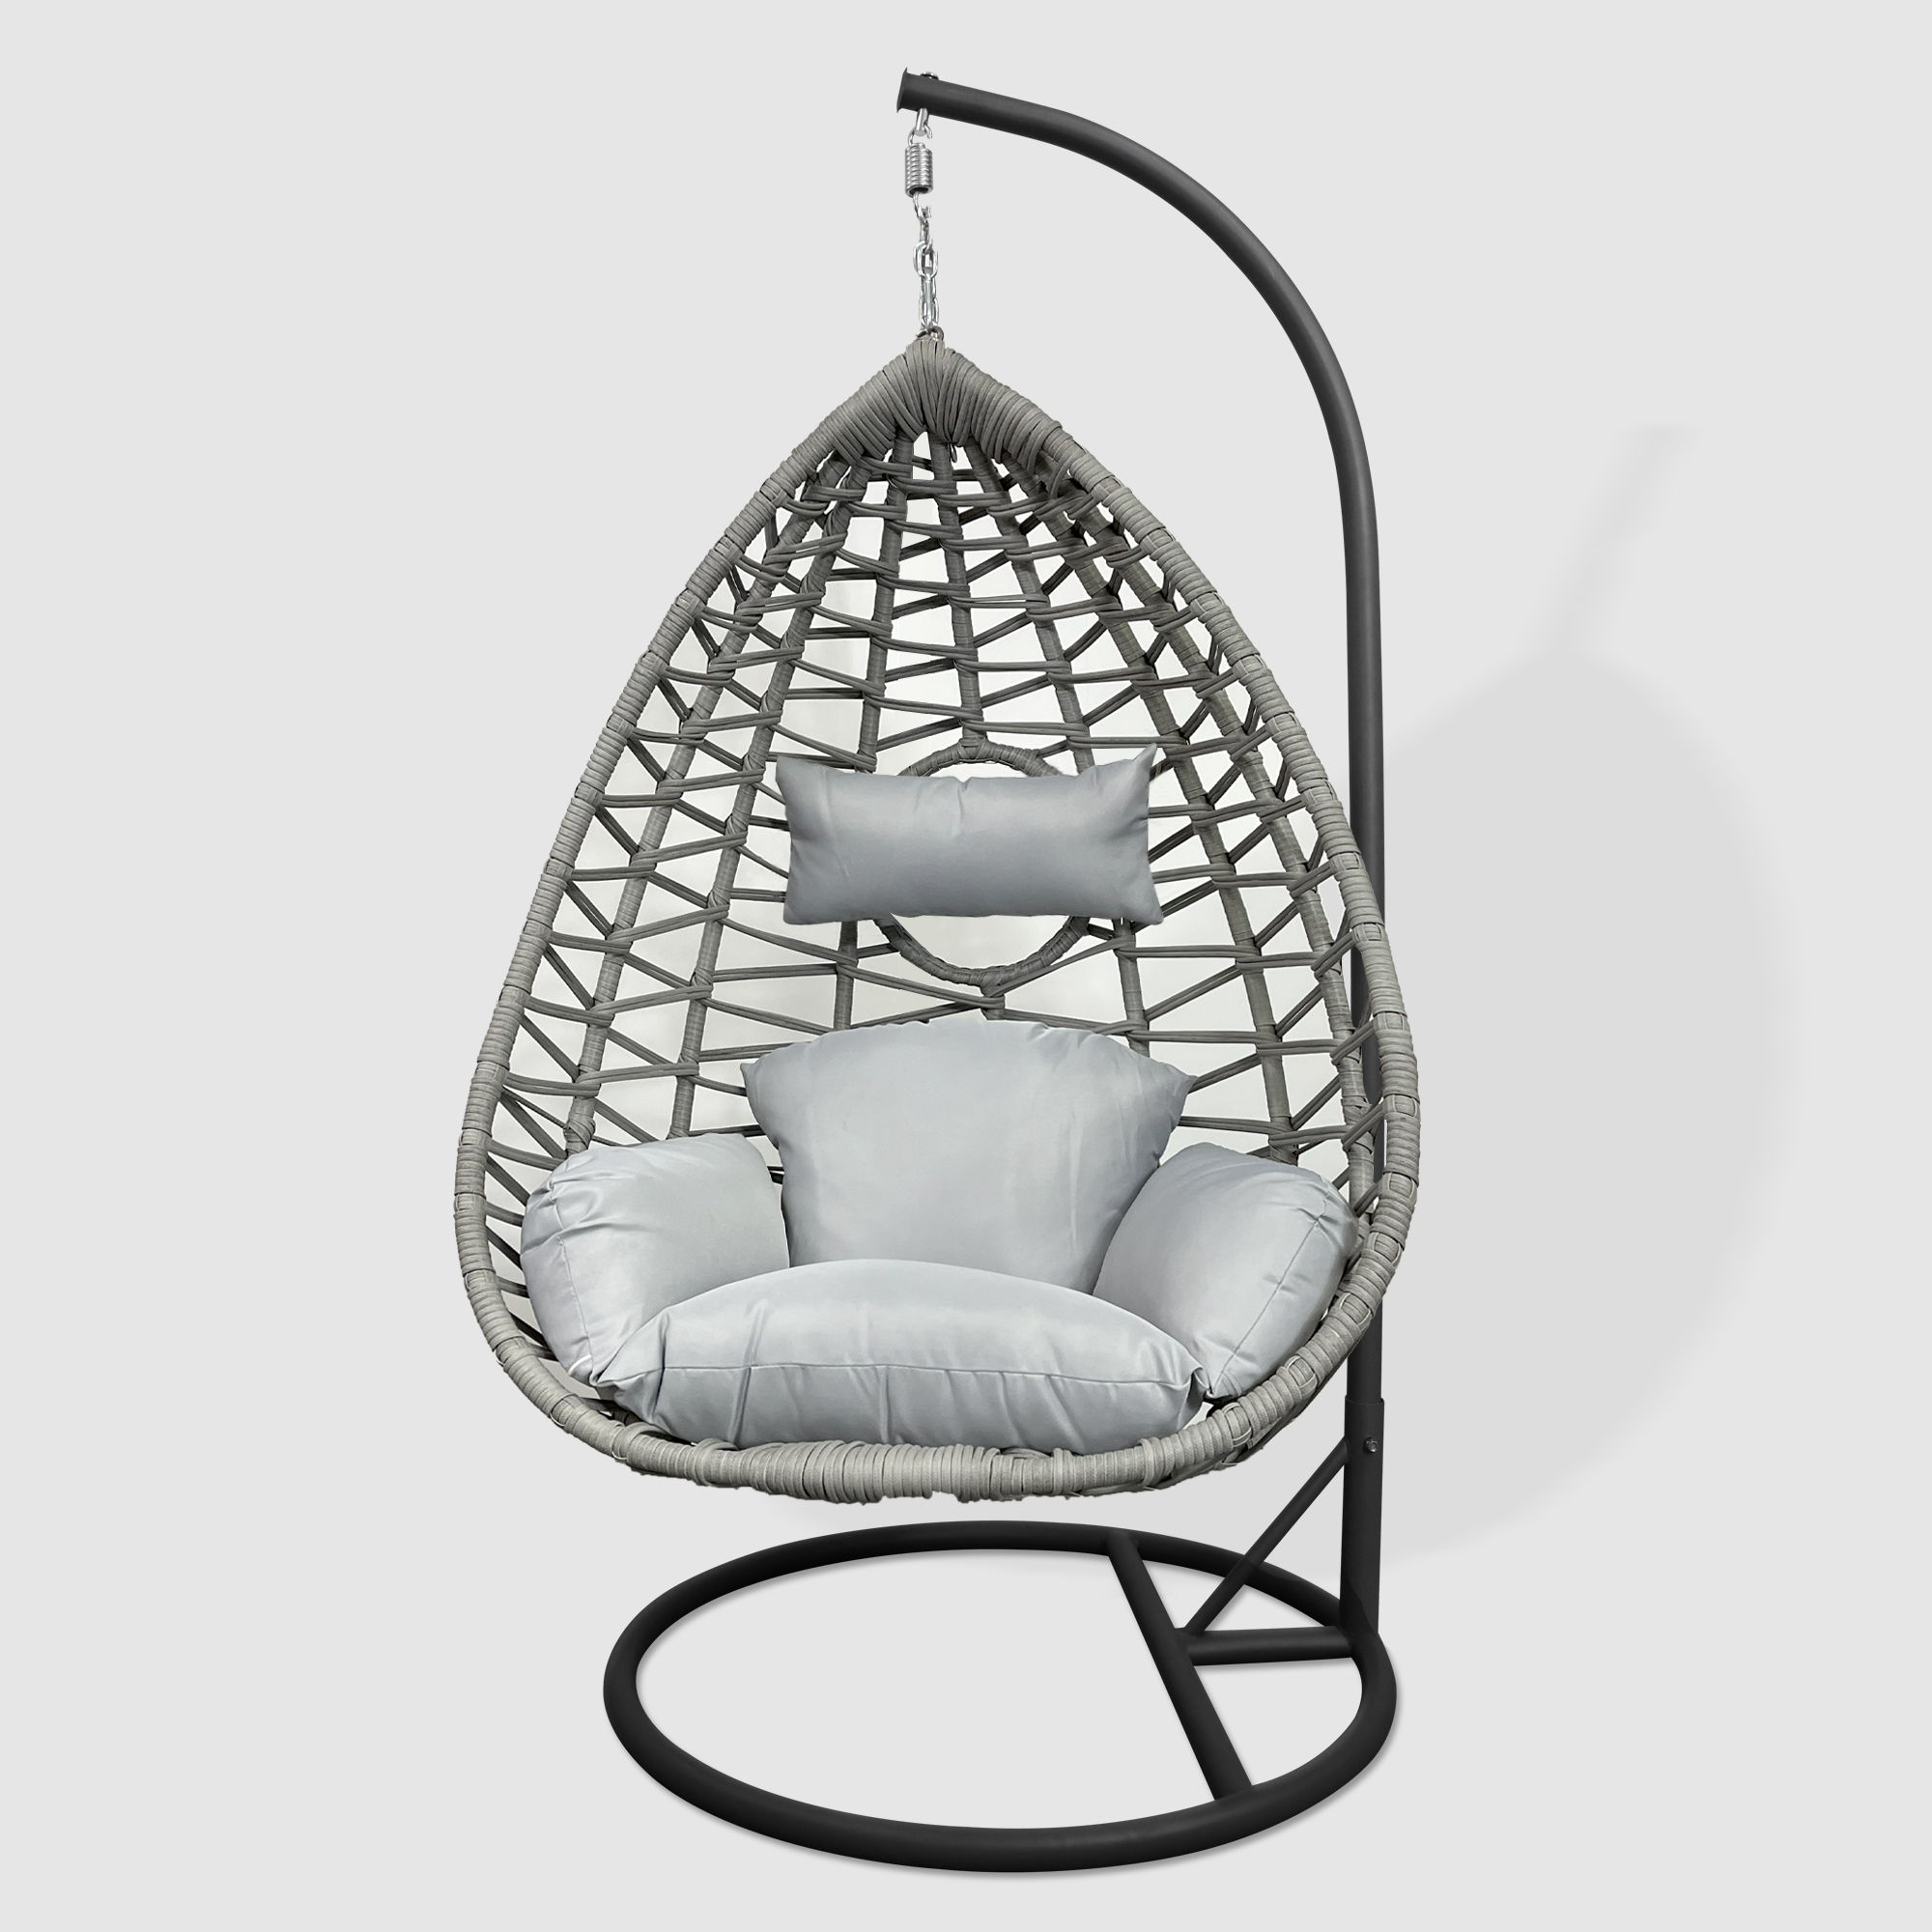 Swing chair designs